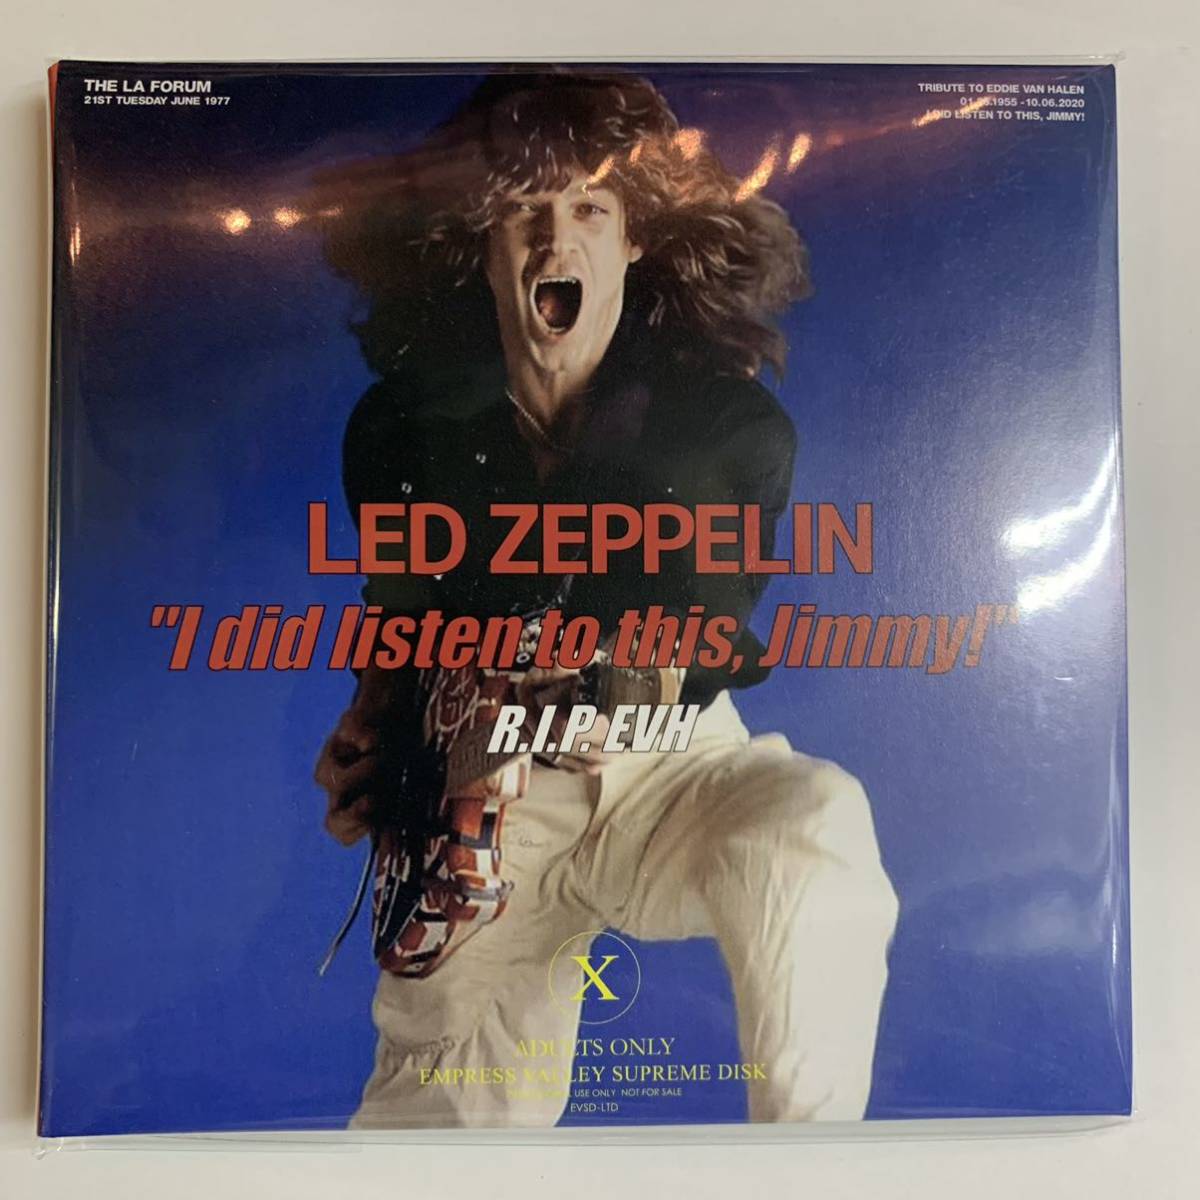 LED ZEPPELIN / LISTEN TO THIS EDDIE! Remastered Collection 6CD + Bonus CD  Empress Valley Supreme Disk! 廃盤タイトル